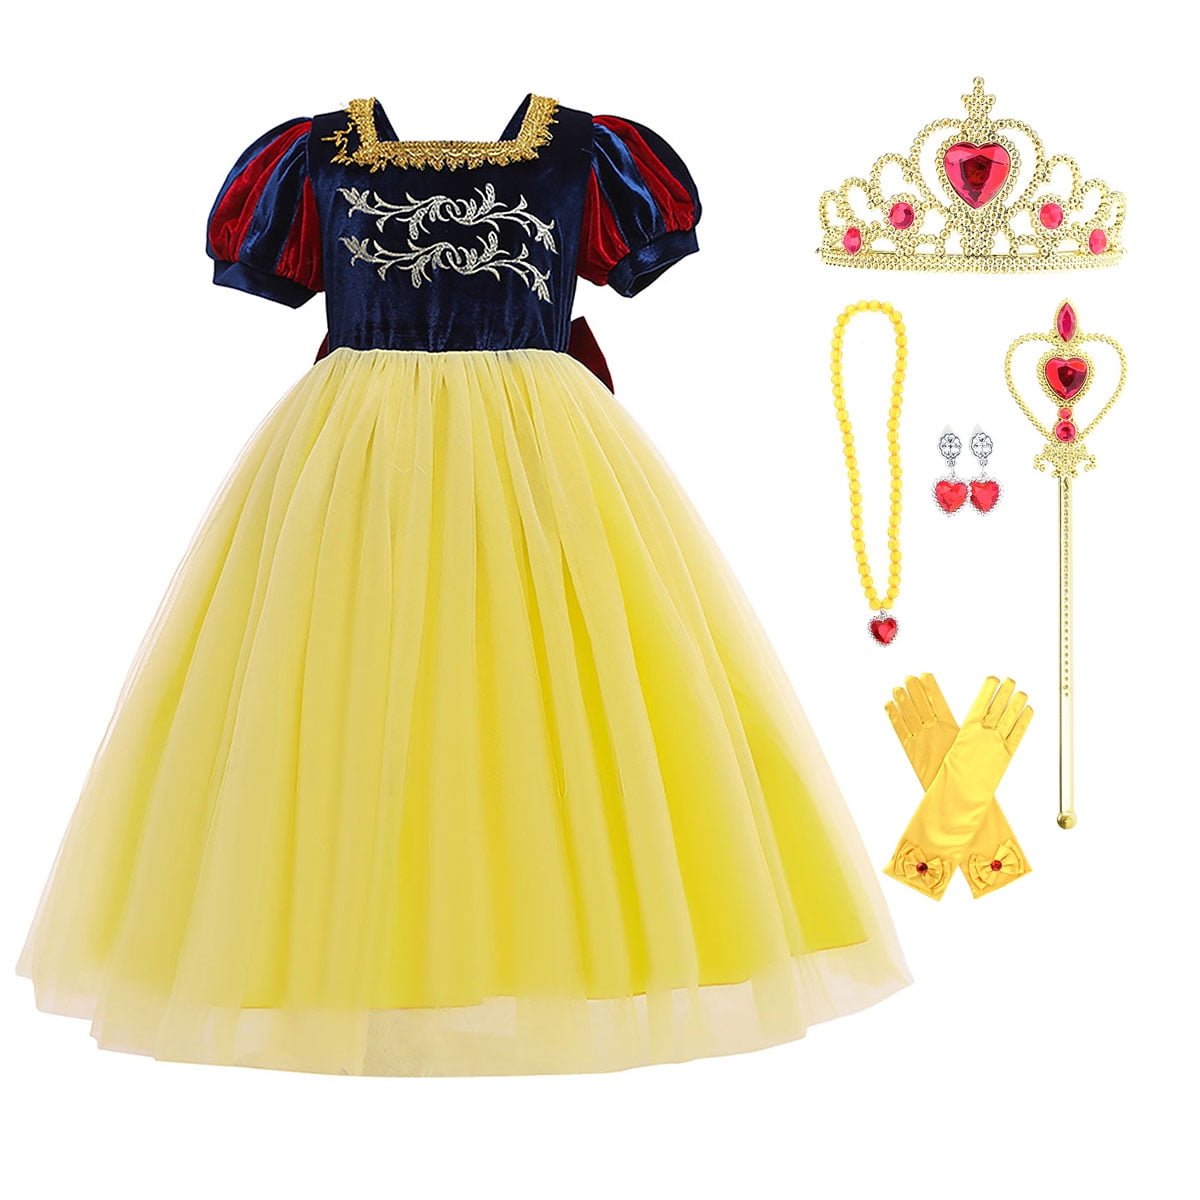 Kids Girls Snow White Princess Dress Christmas Party Fancy Cosplay Costume O36 